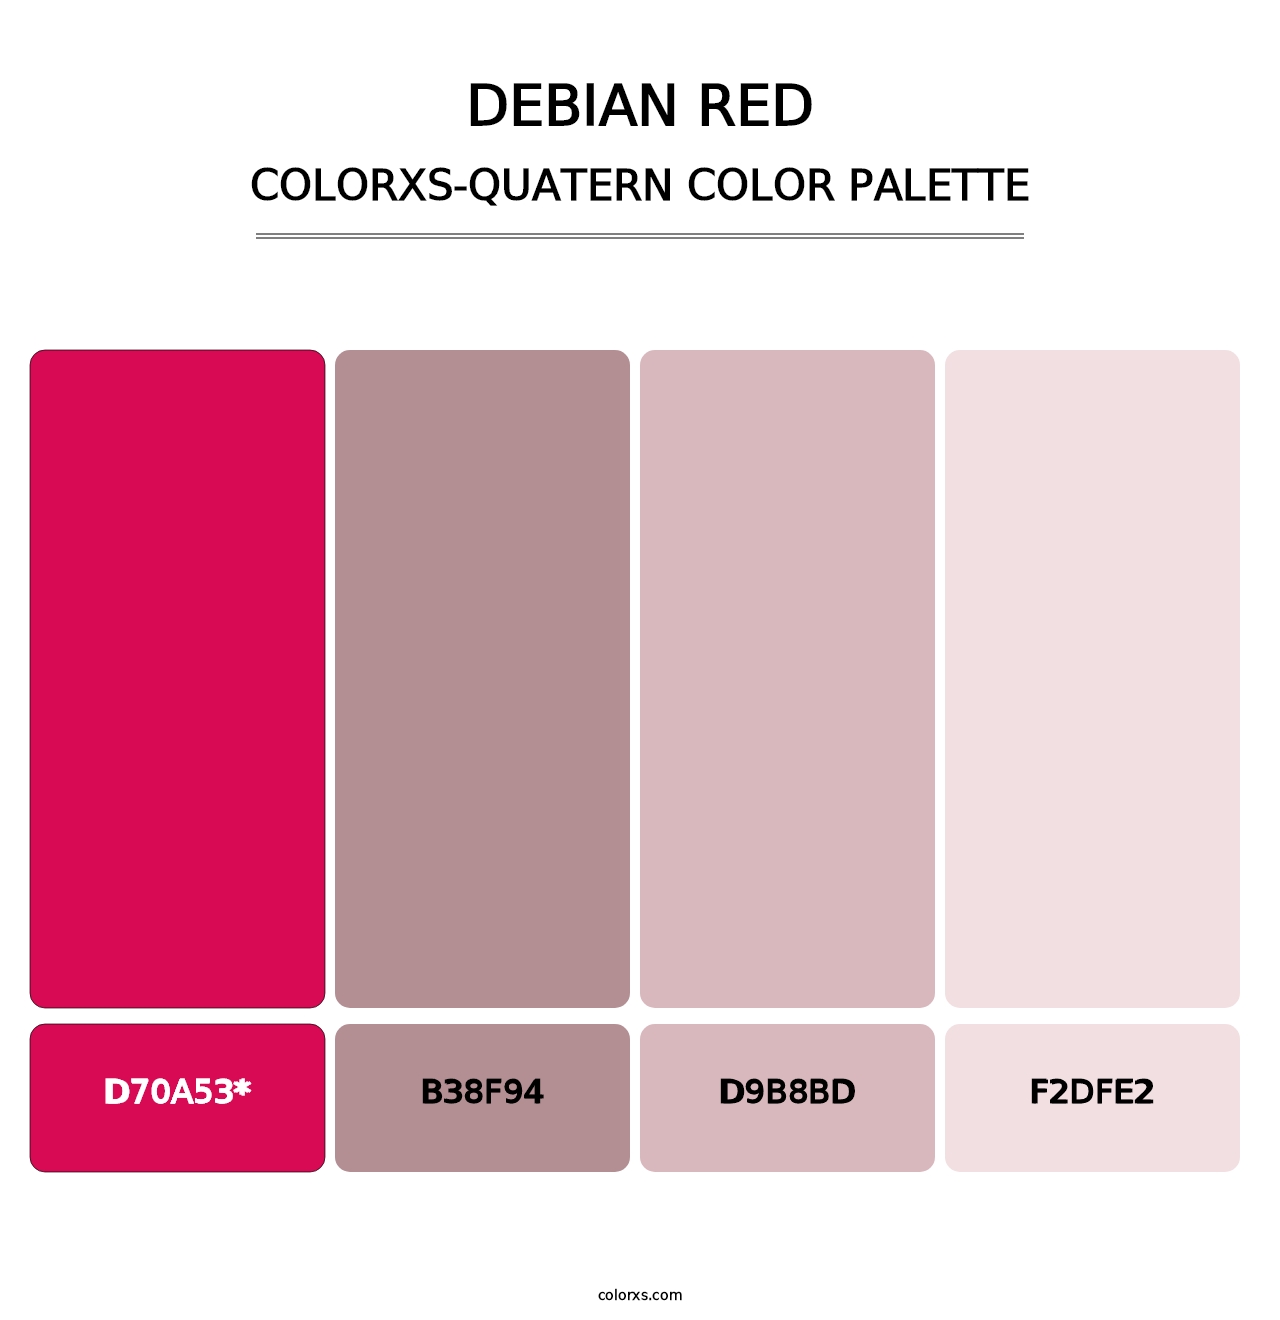 Debian red - Colorxs Quatern Palette